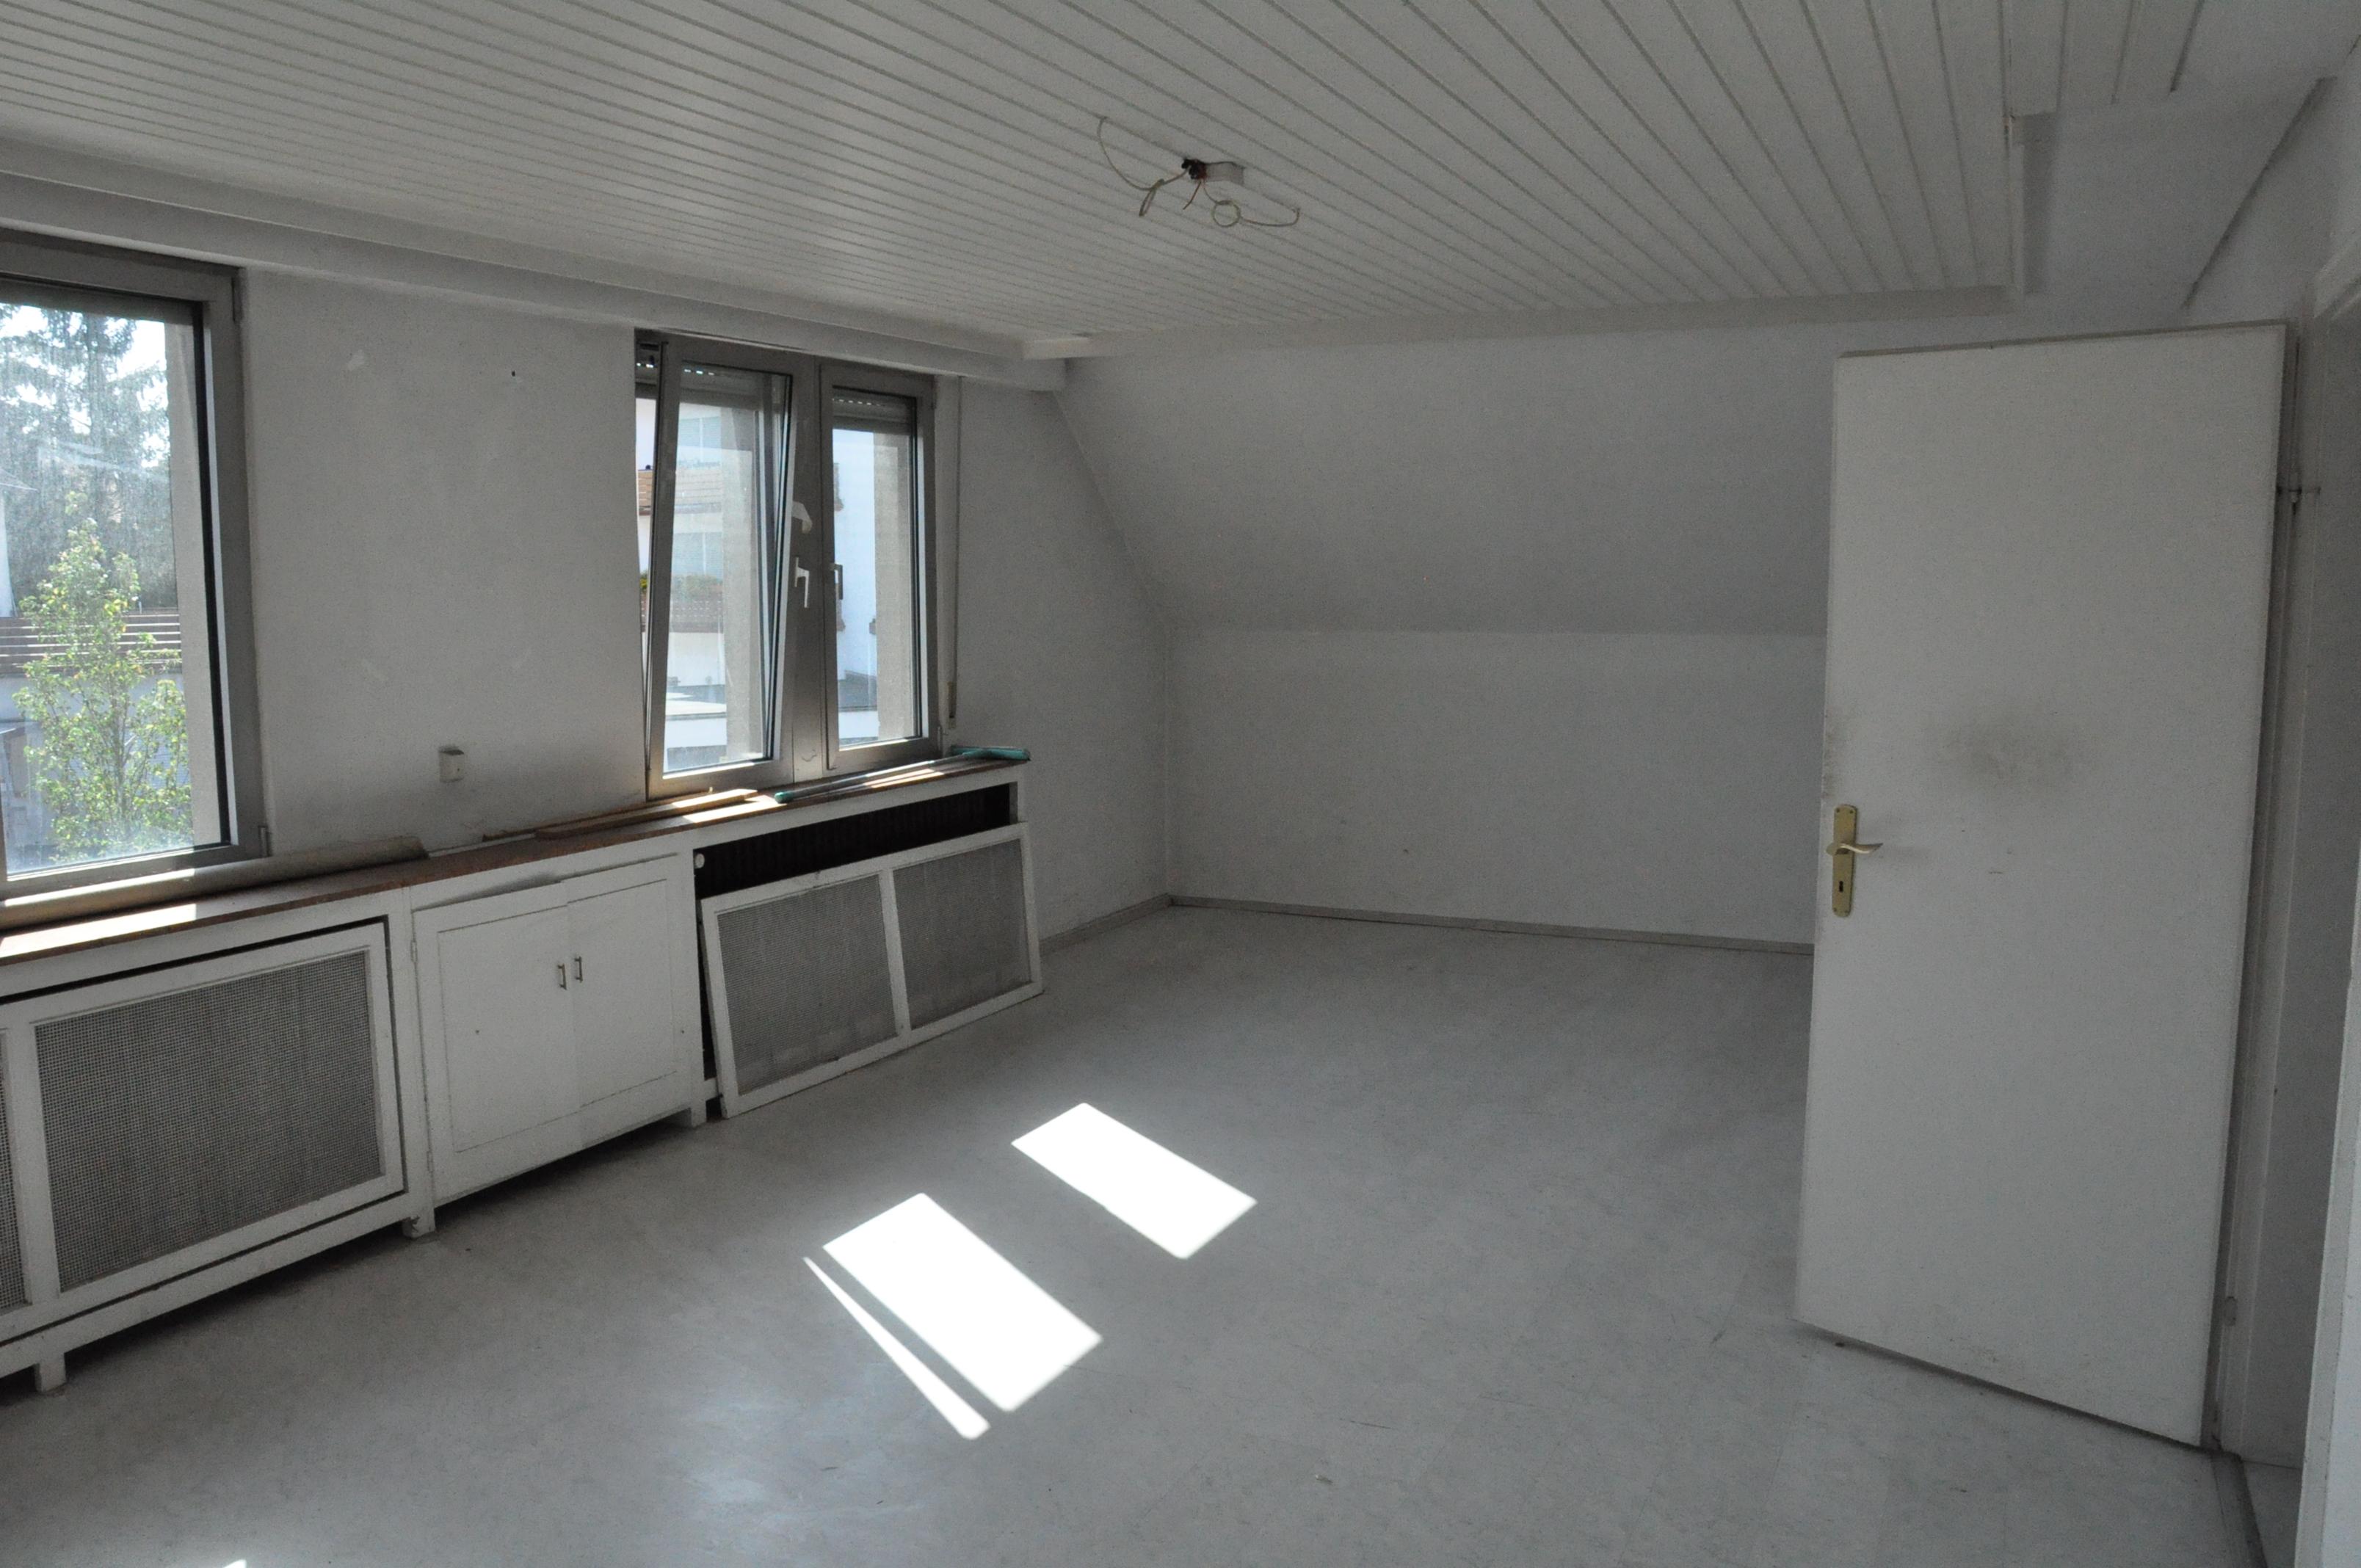 Vor dem Umbau #dachausbau #kamin #wohnzimmer #loft #galerie ©Tatjana Adelt